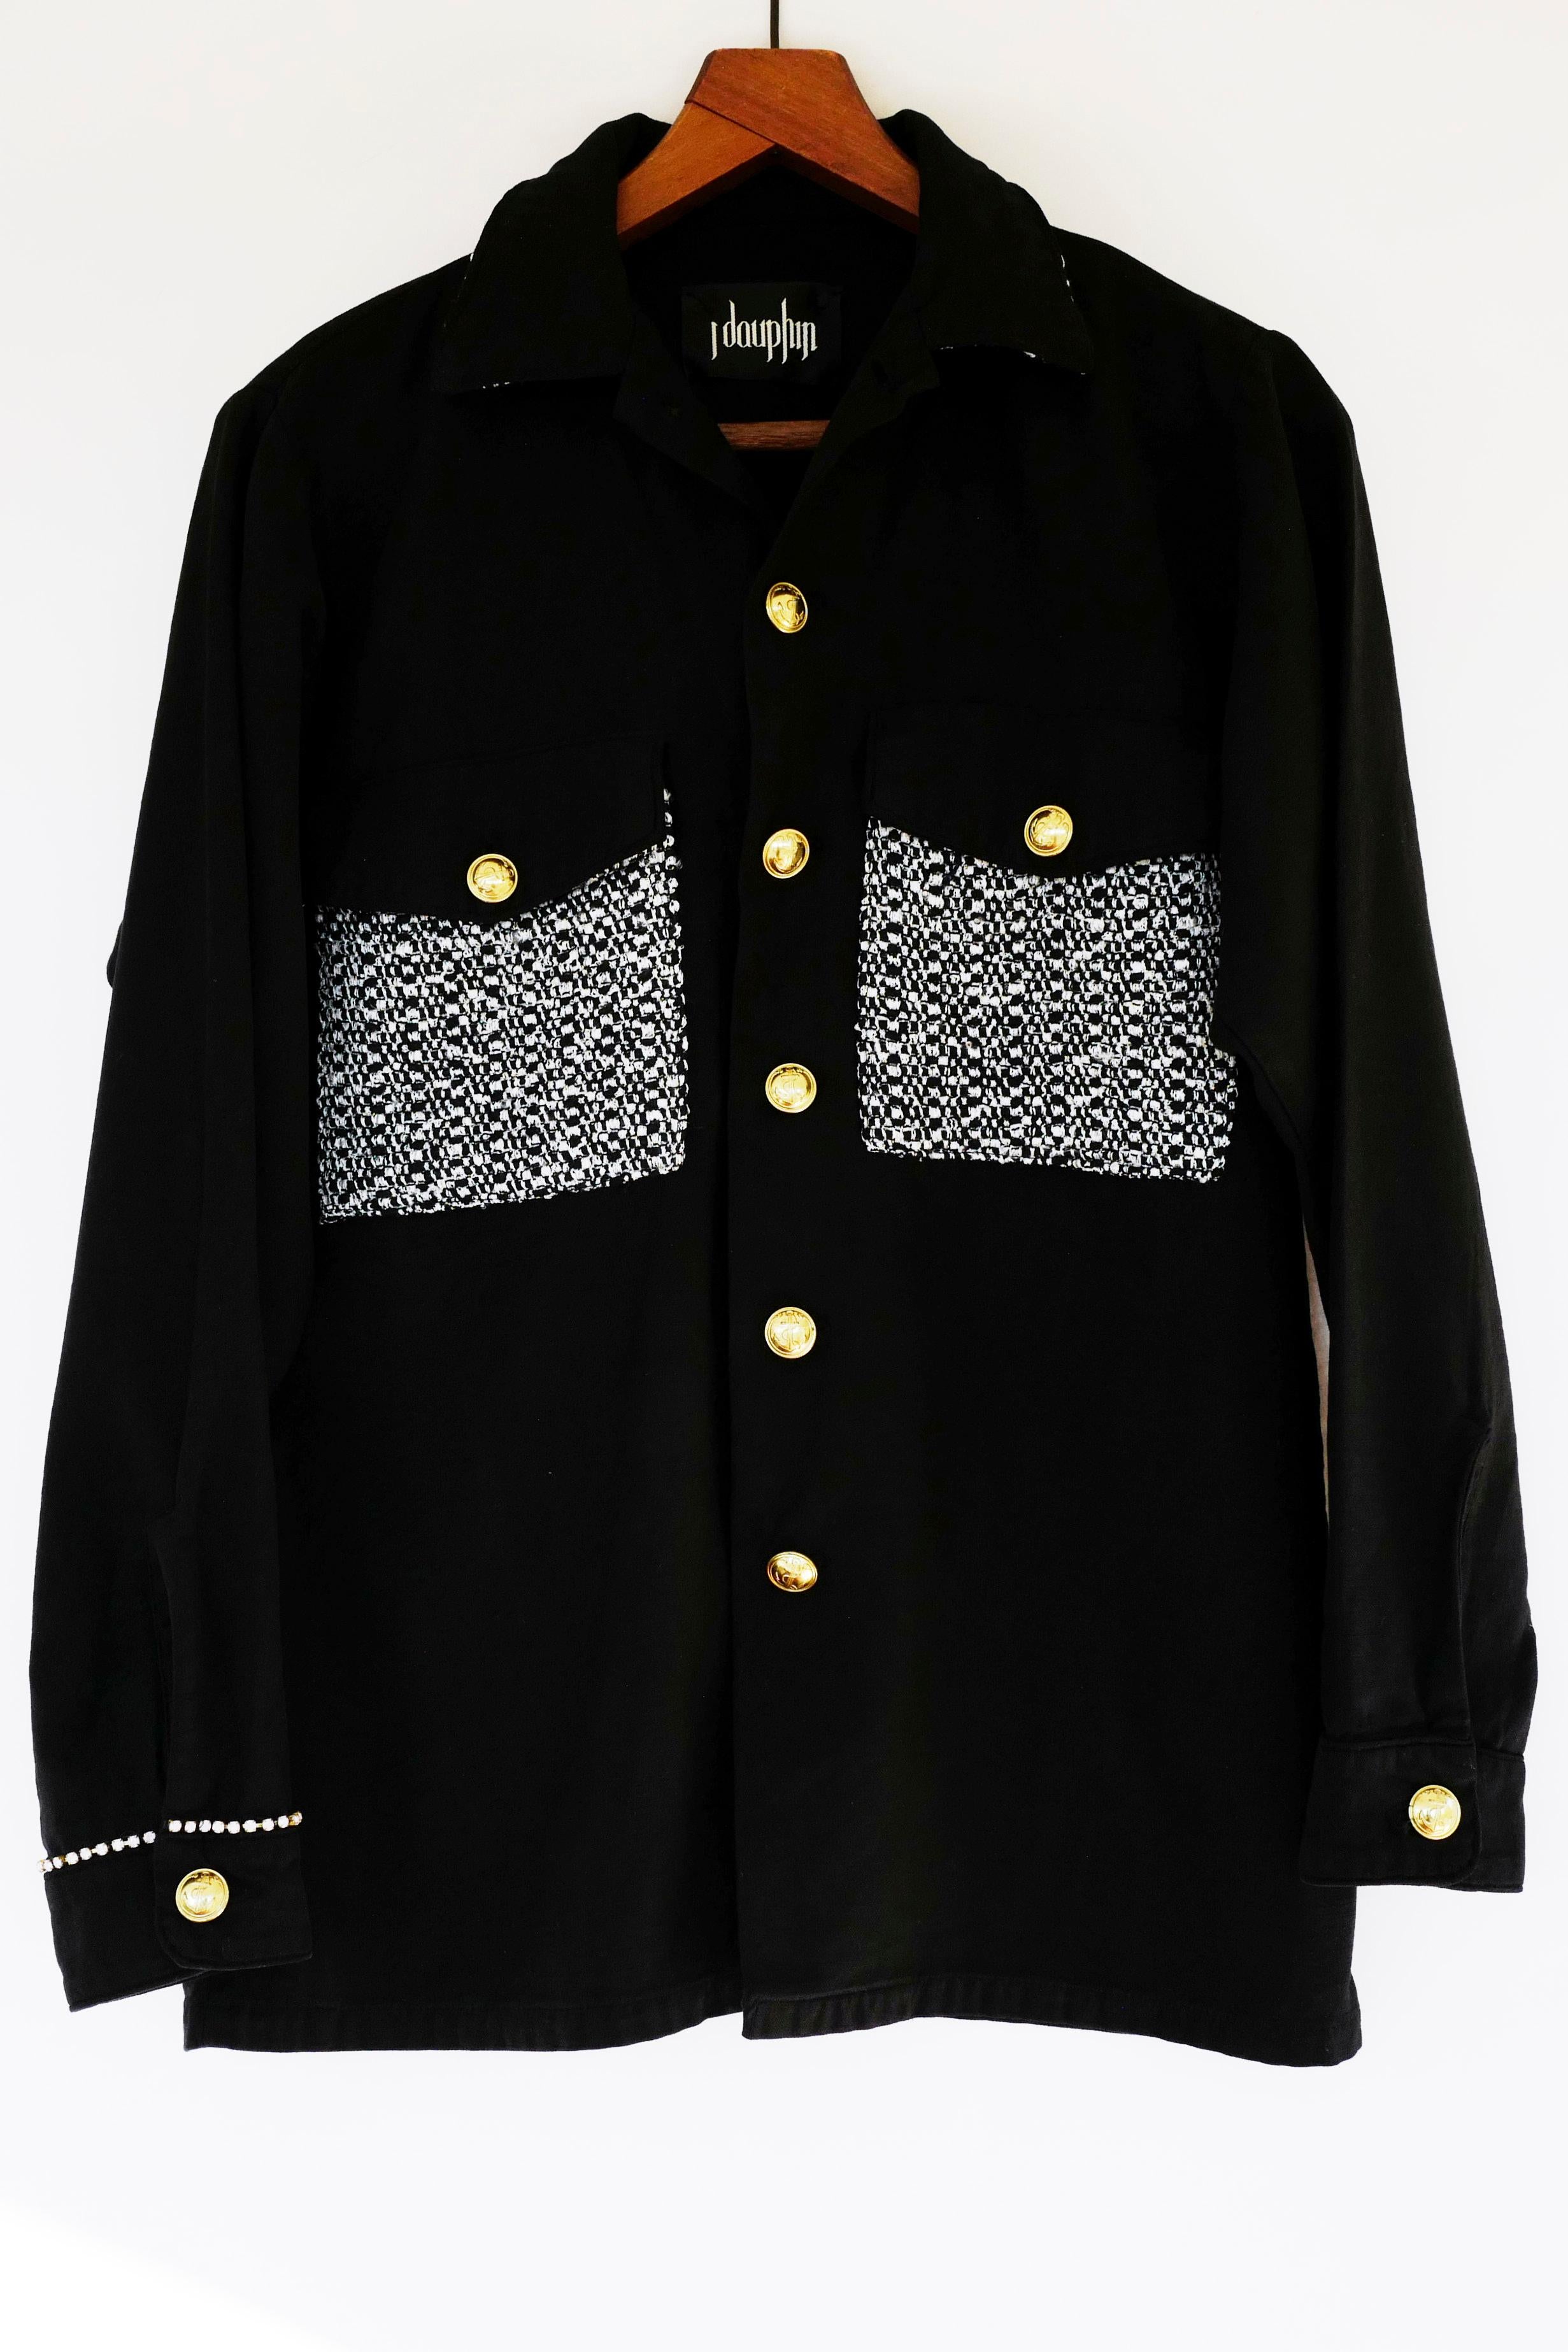 Embellished Rhinestone Jacket Black Lurex Tweed Military Gold Buttons J Dauphin  1